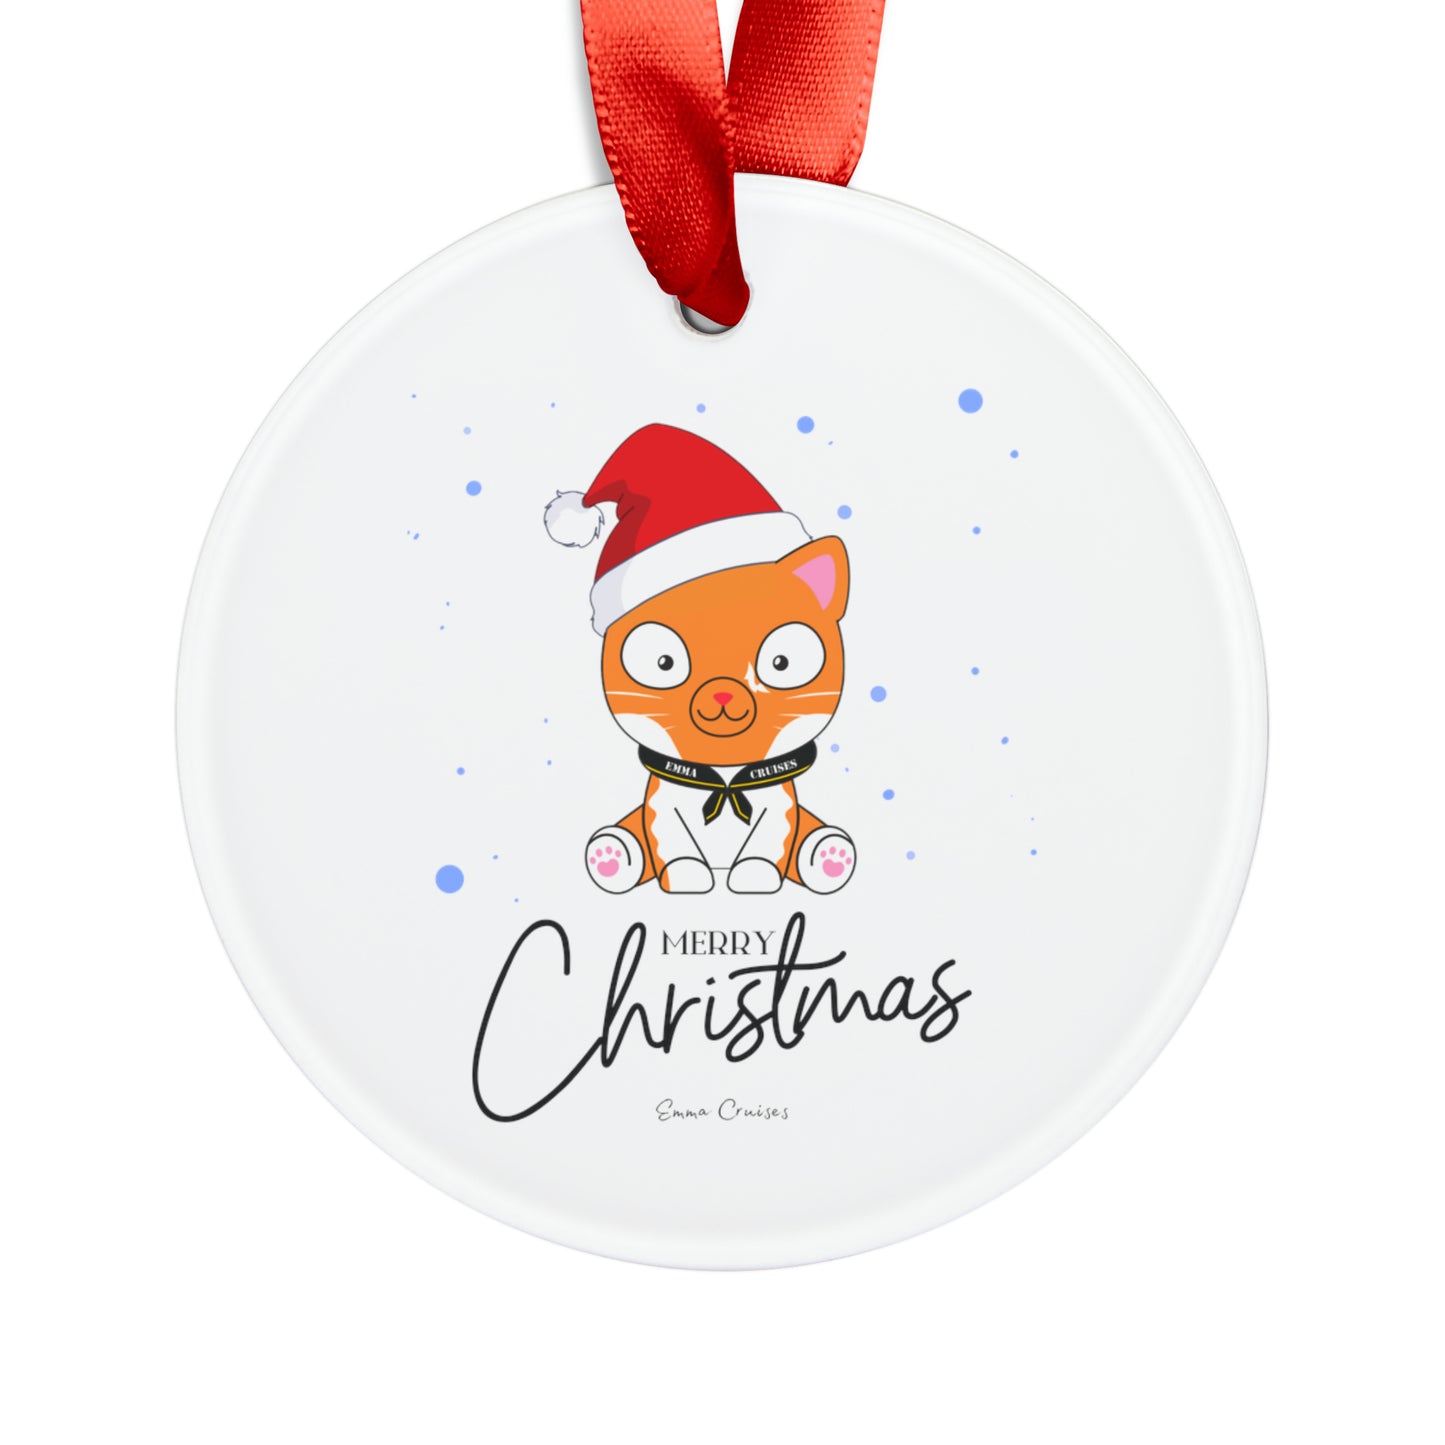 Merry Christmas - Christmas Ornament